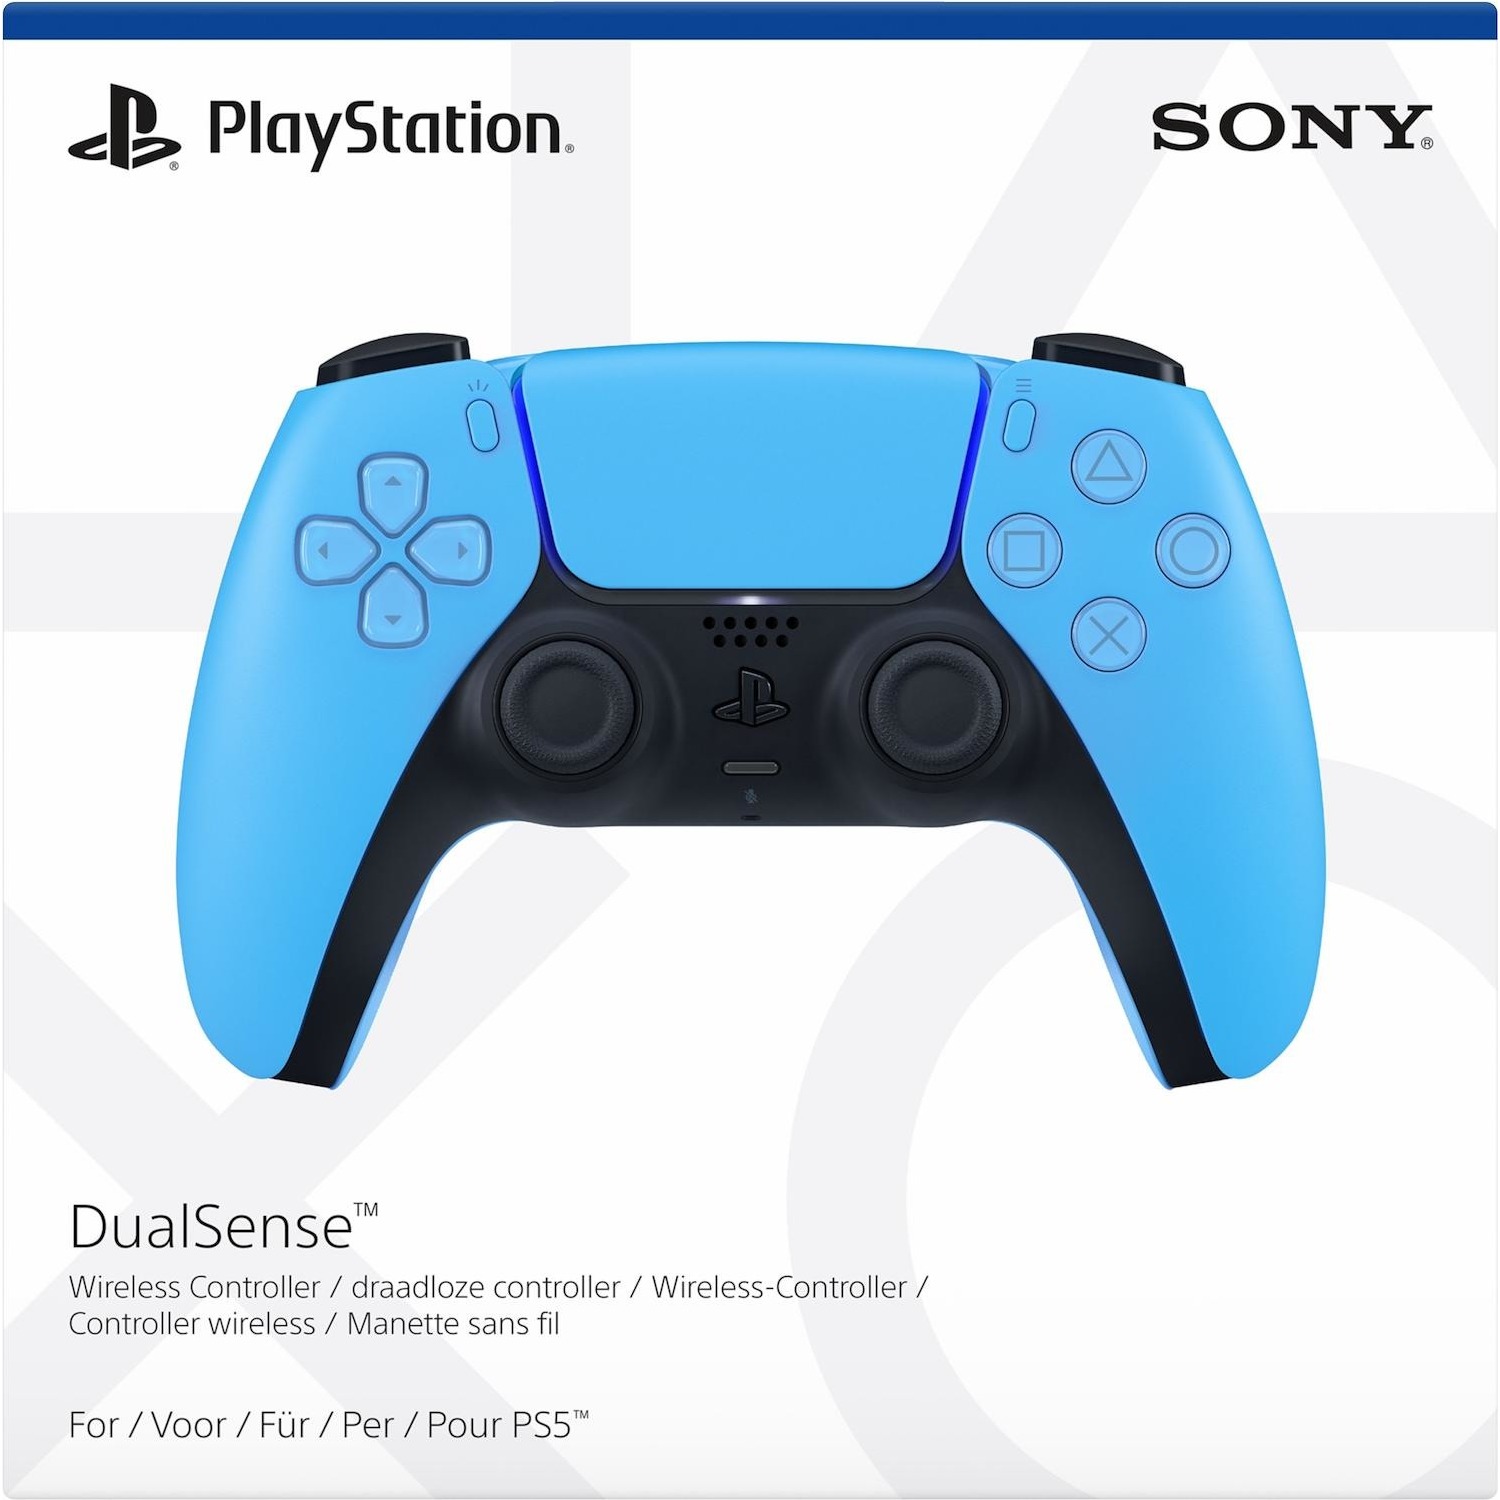 Immagine per PlayStation PS5 PAD DualSense Starlight Blue V2 Controller da DIMOStore